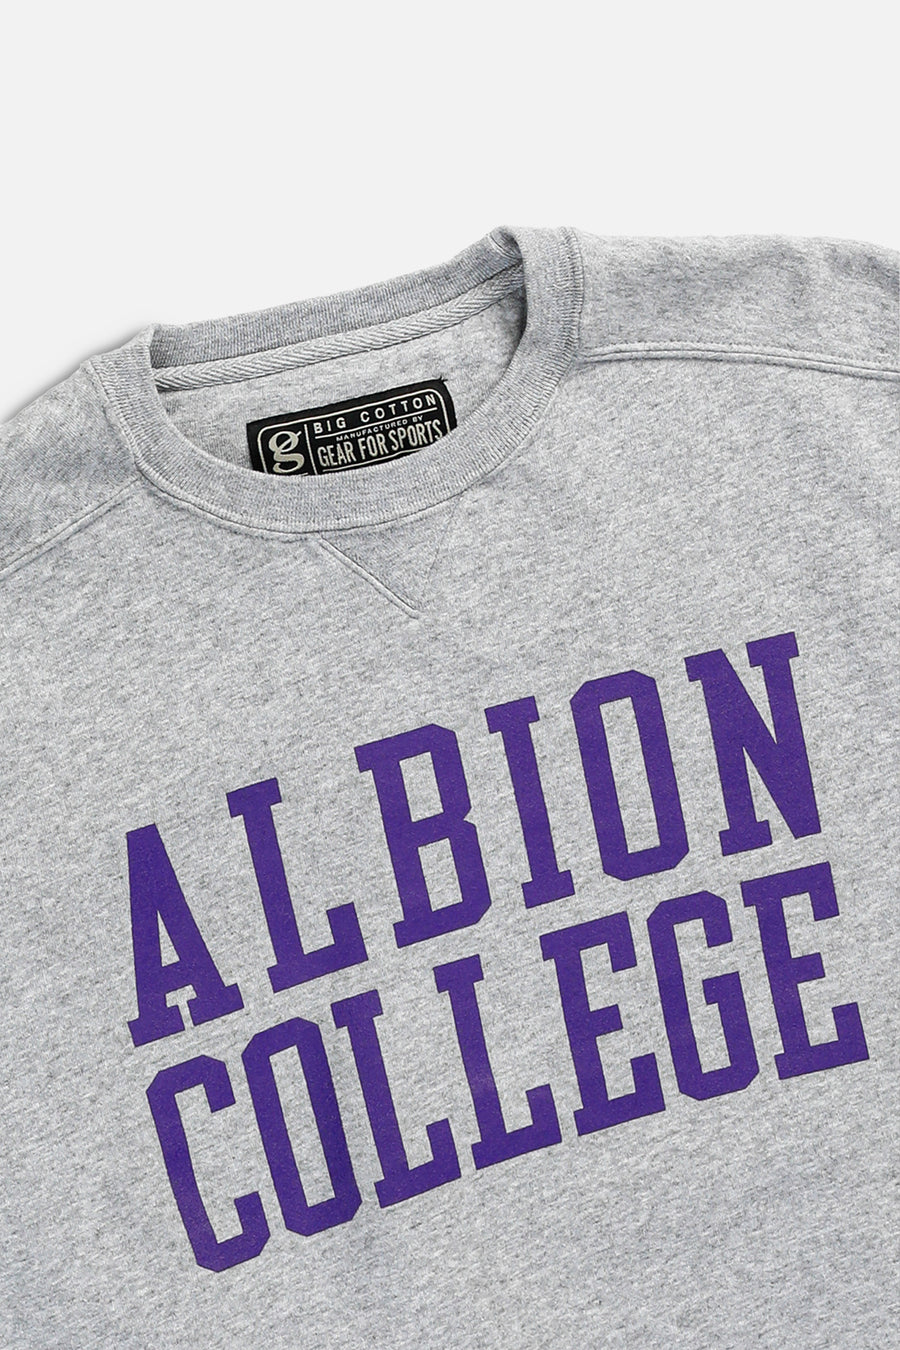 Vintage Albion College Sweatshirt - S